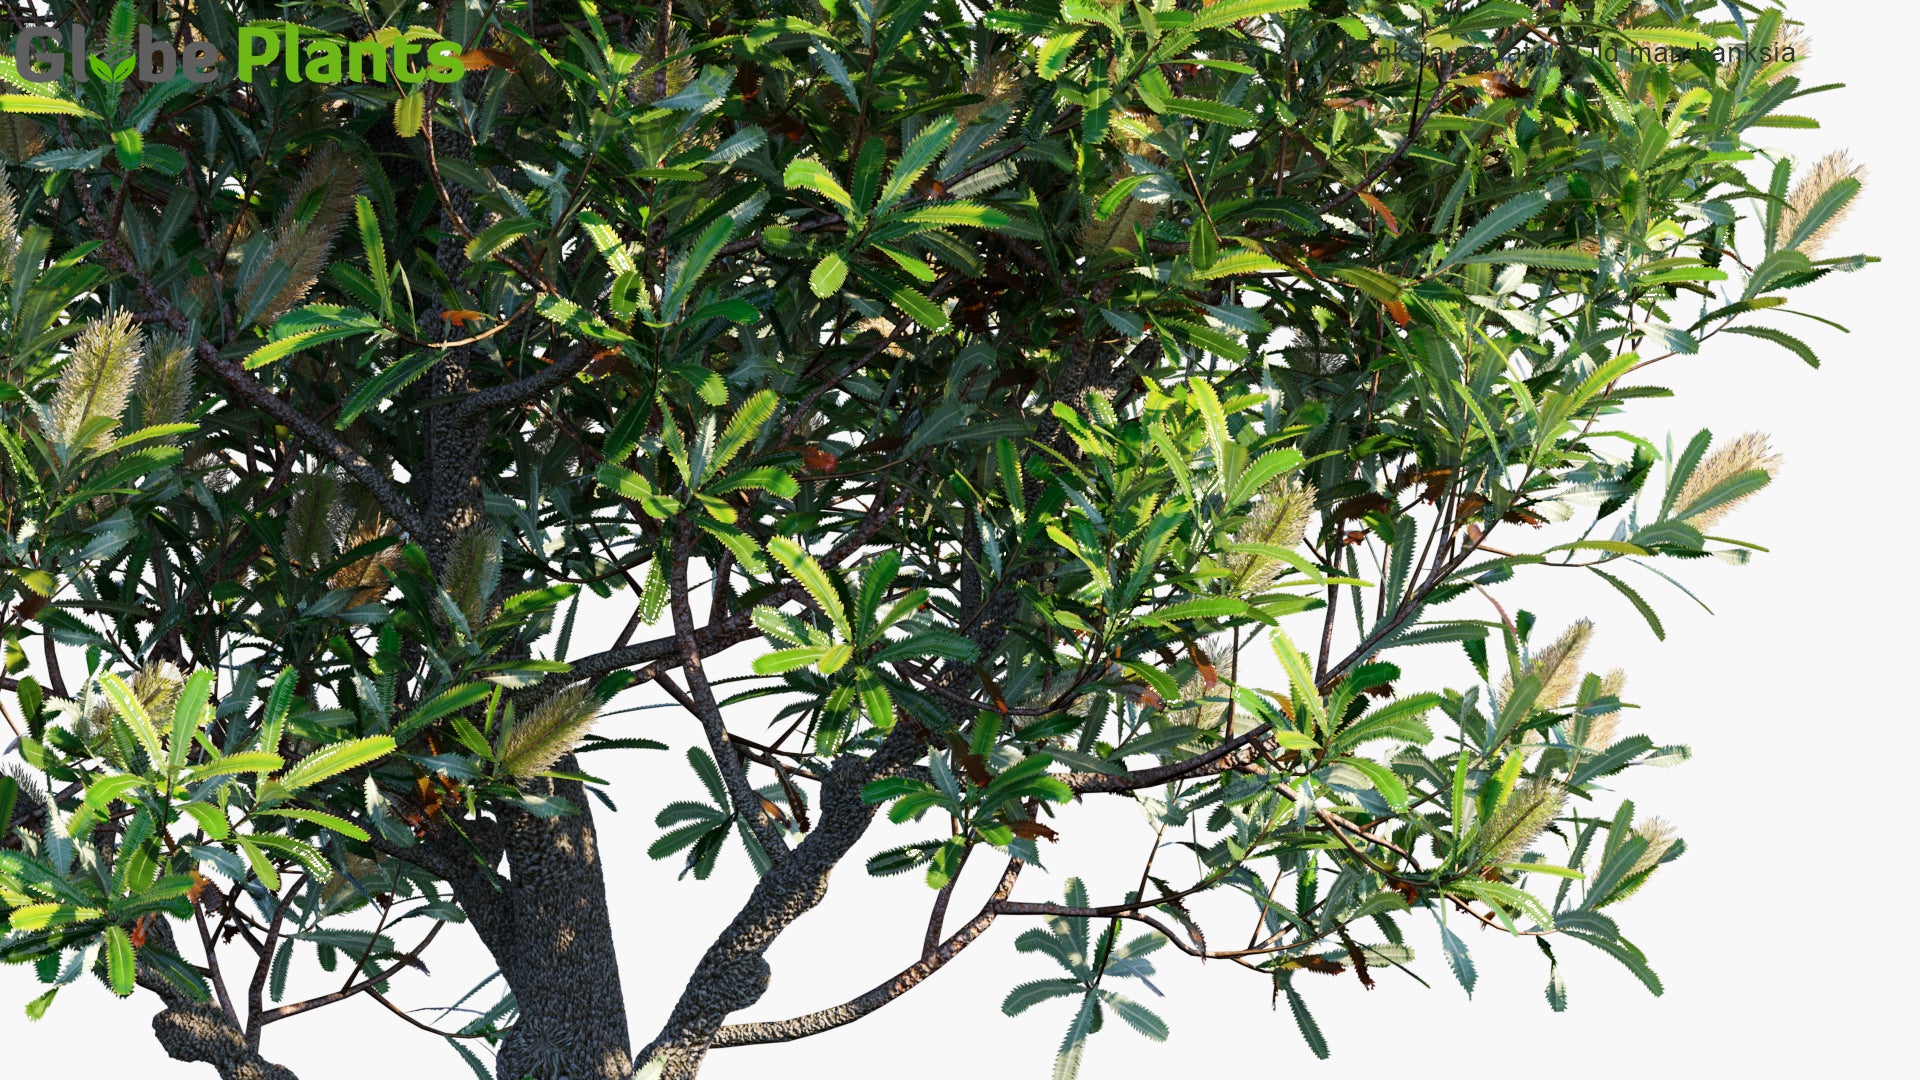 Banksia Serrata - Old Man Banksia